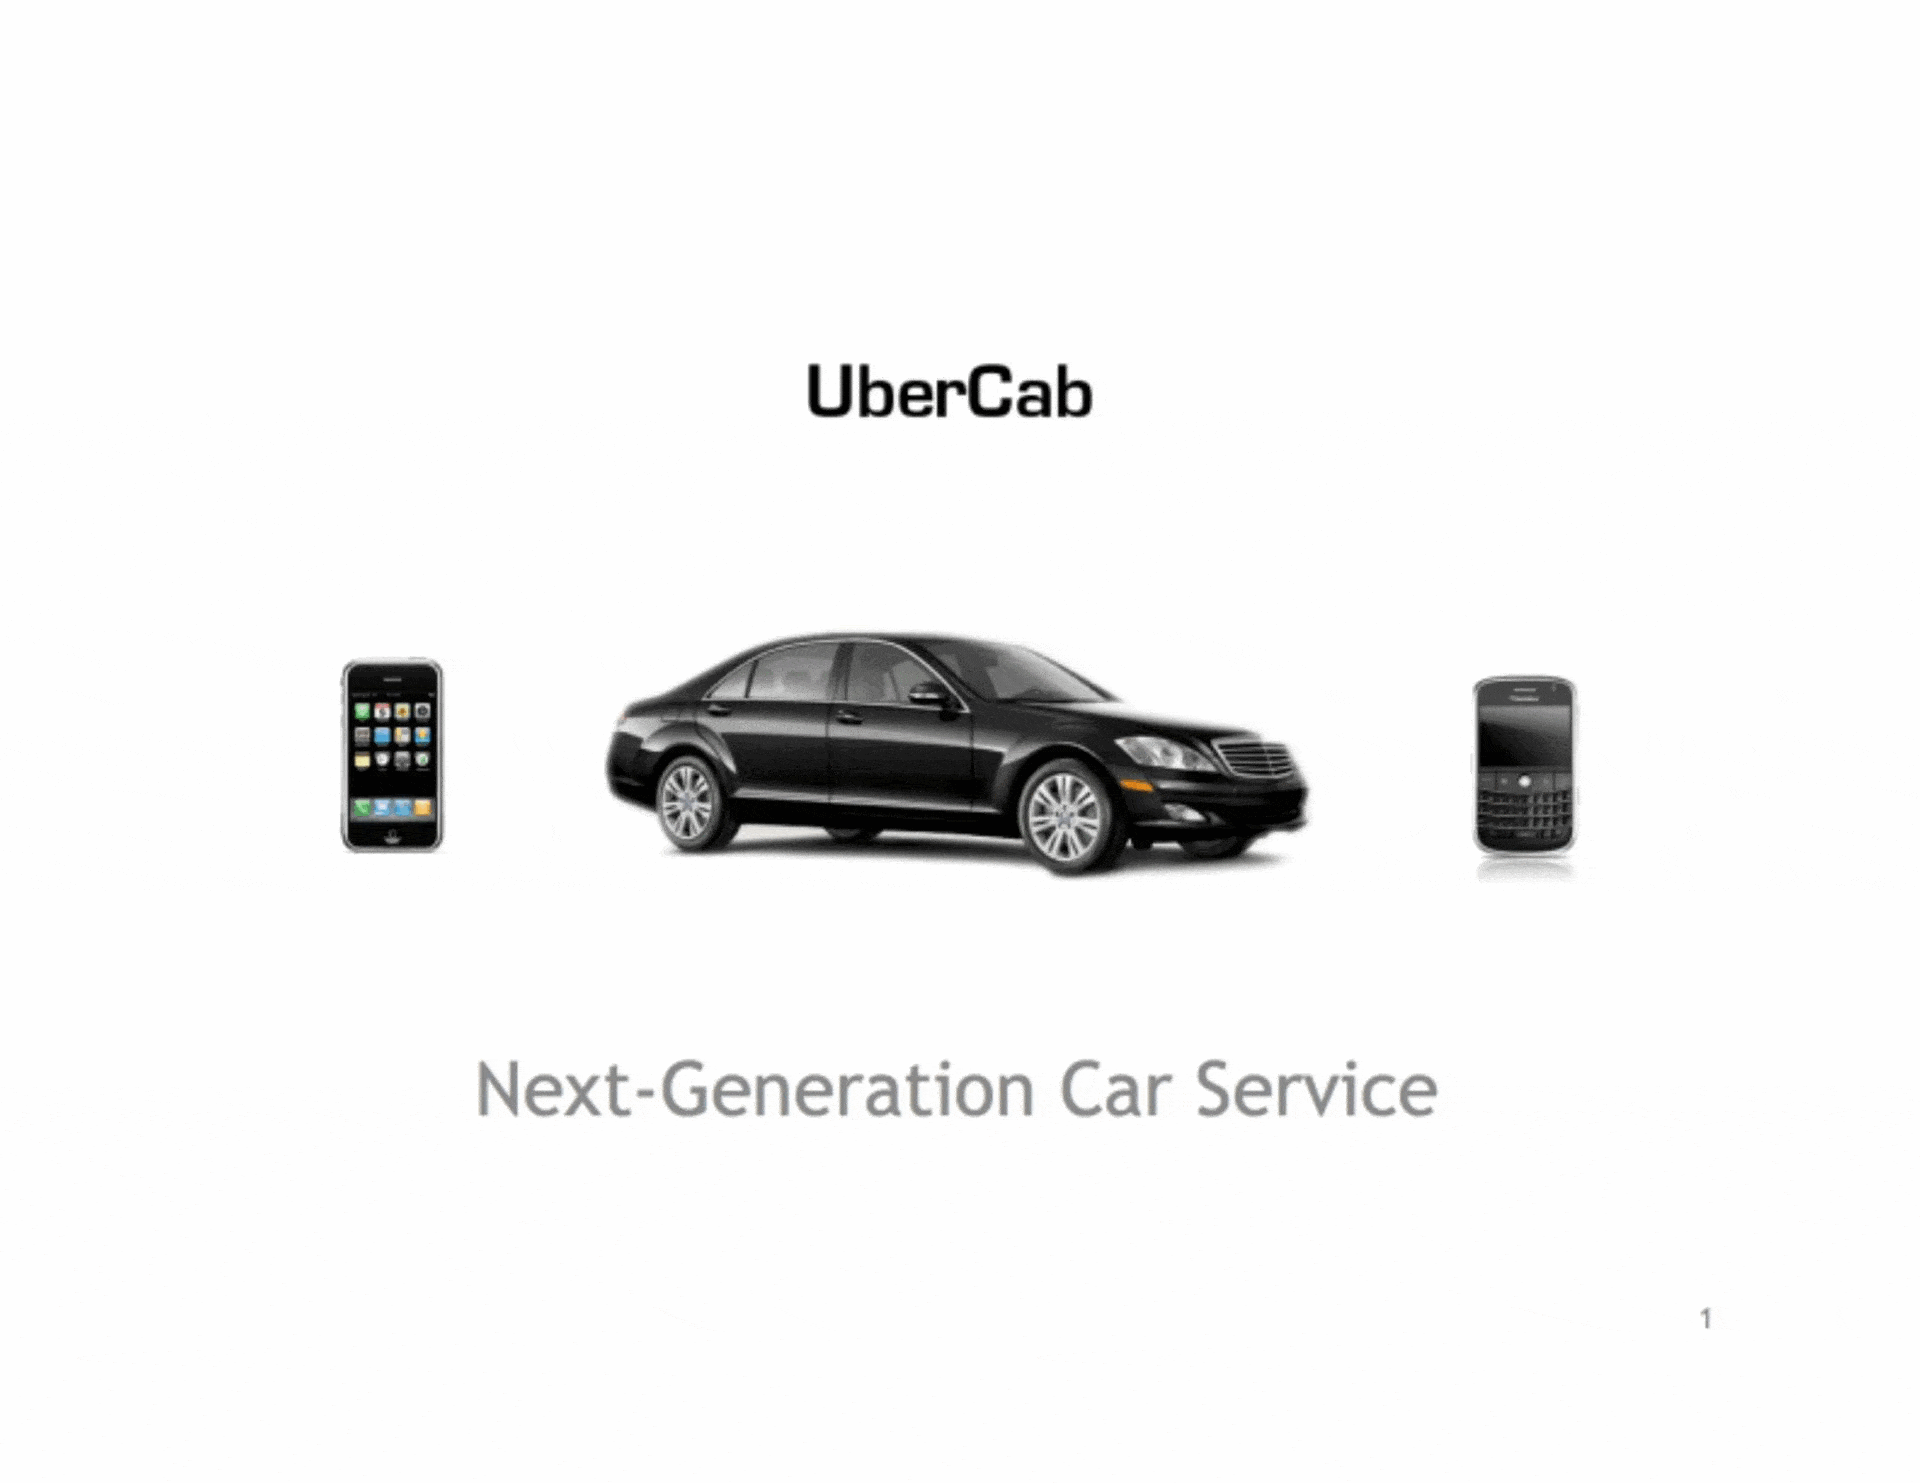 uber first presentation